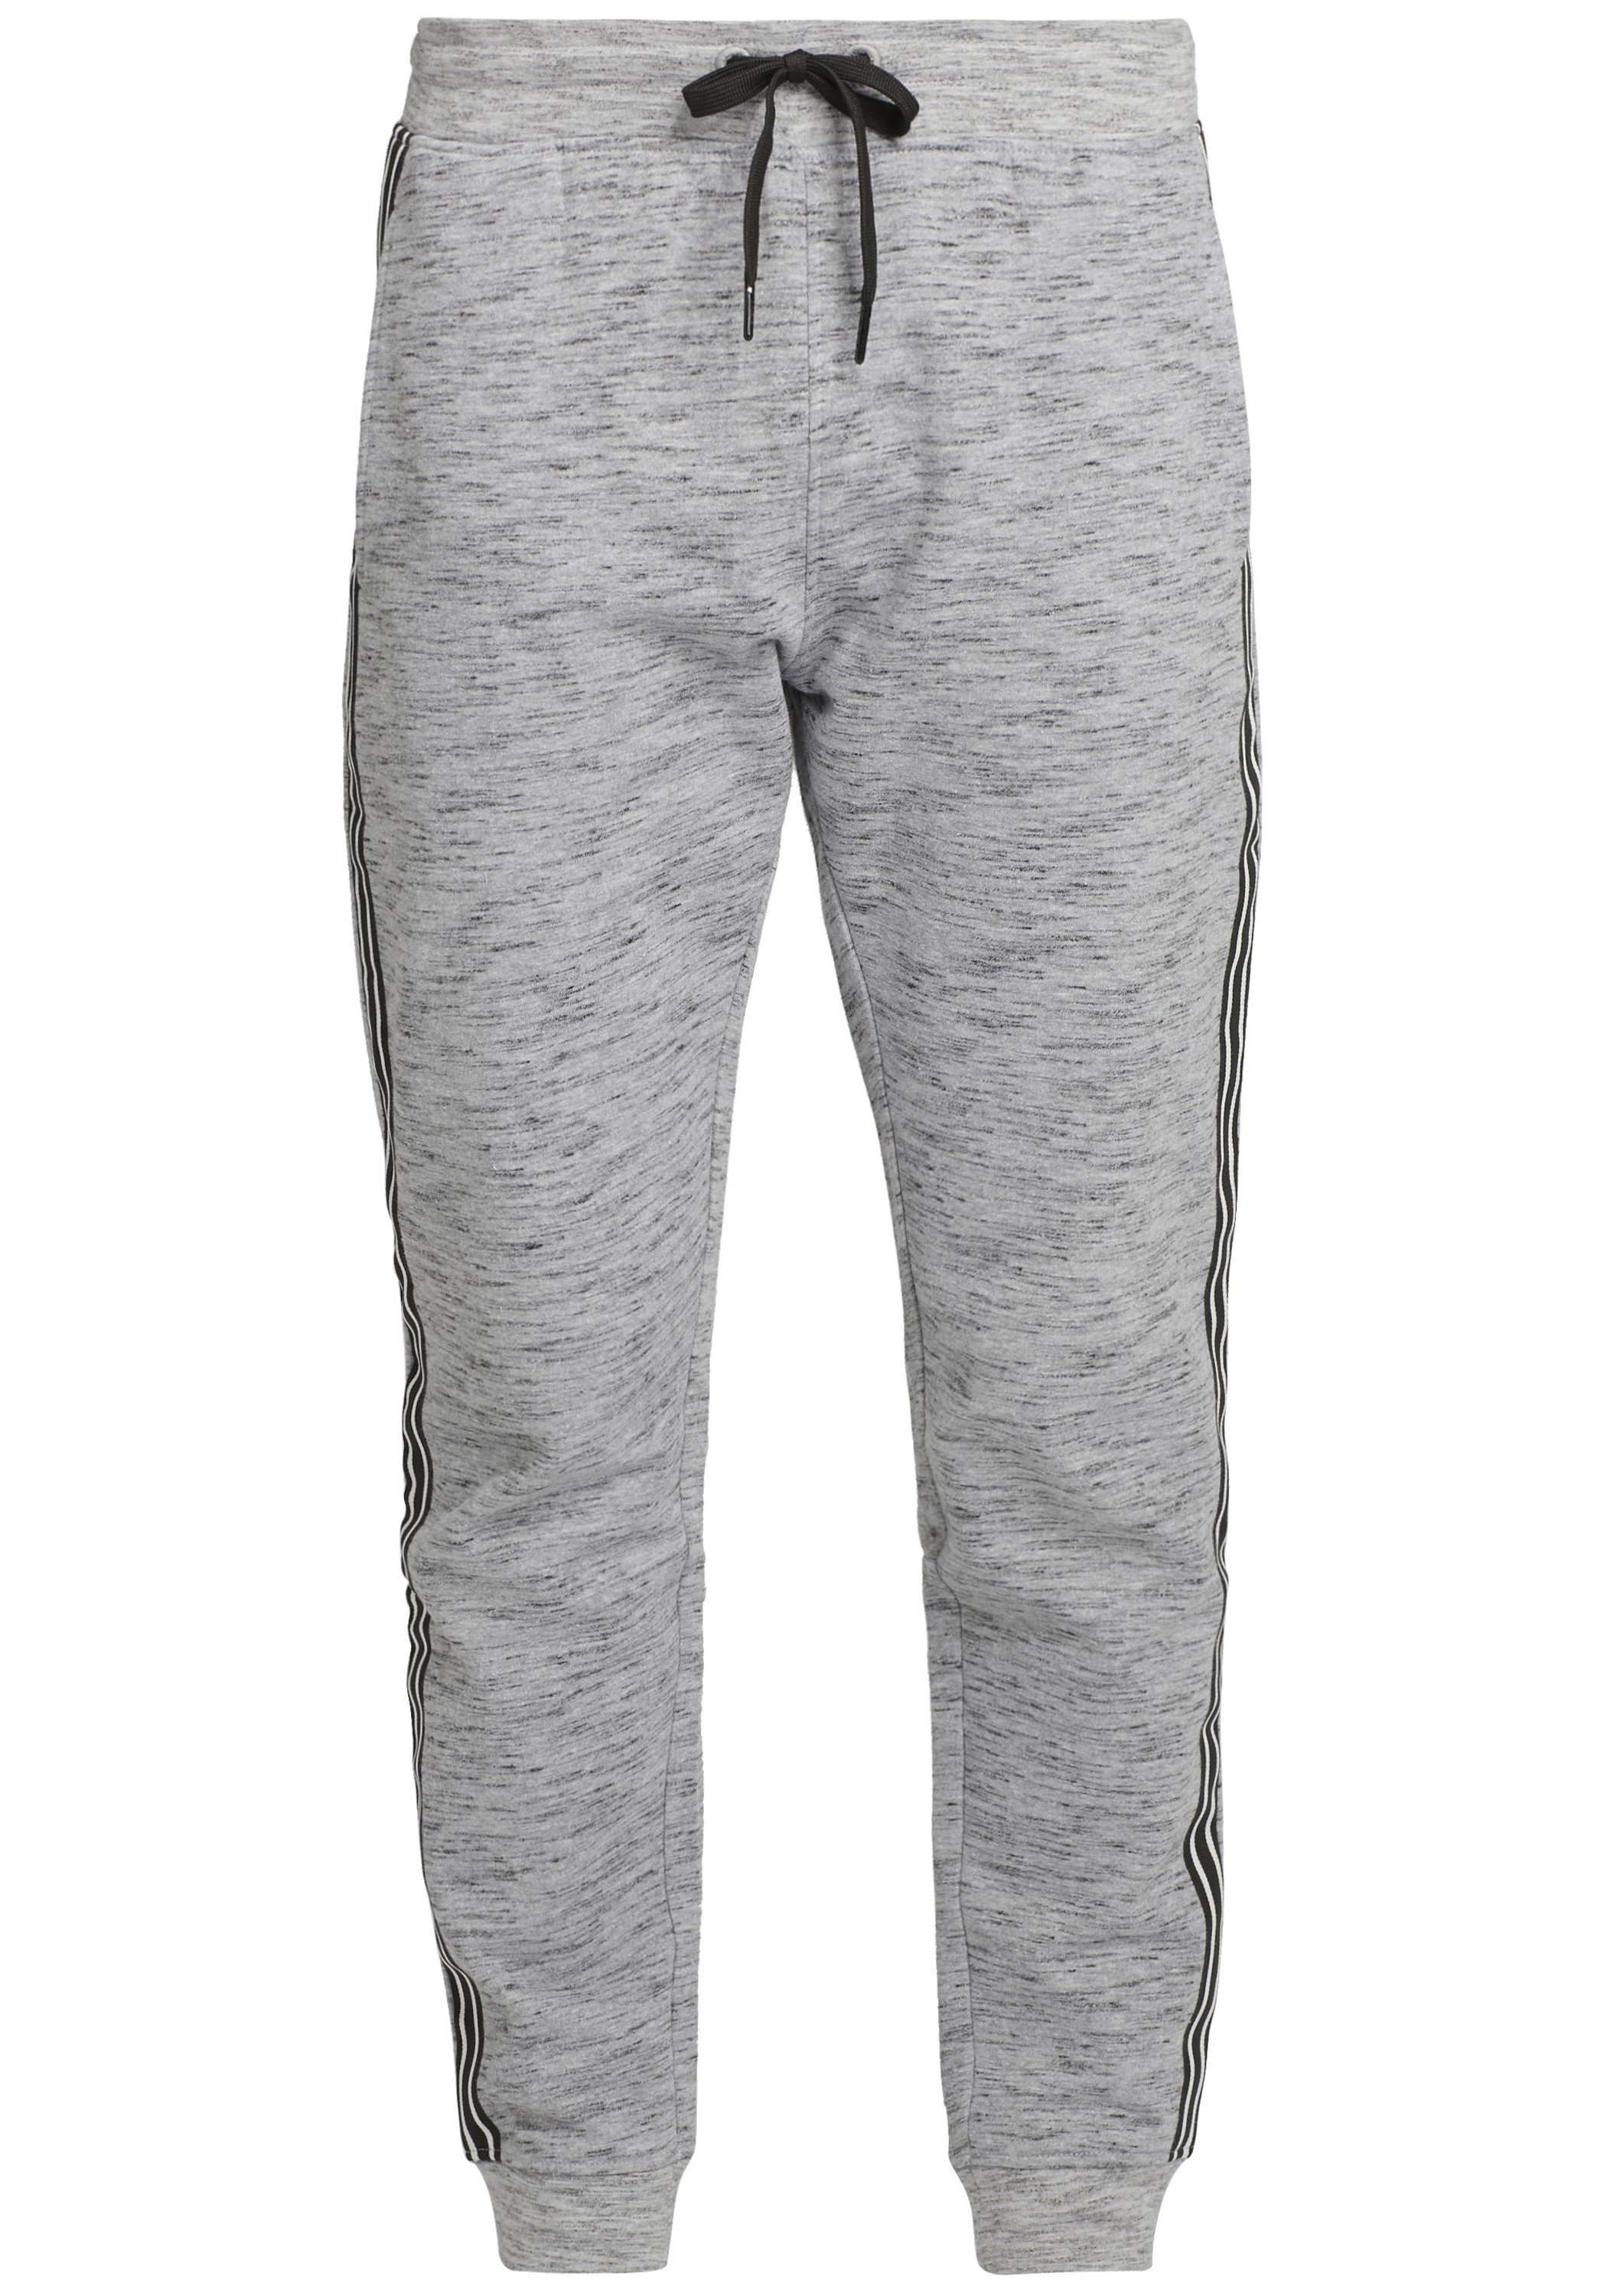 SDGalman Melange Grey !Solid mit Galonstreifen Jogginghose (1840051) Lange Sweatpants